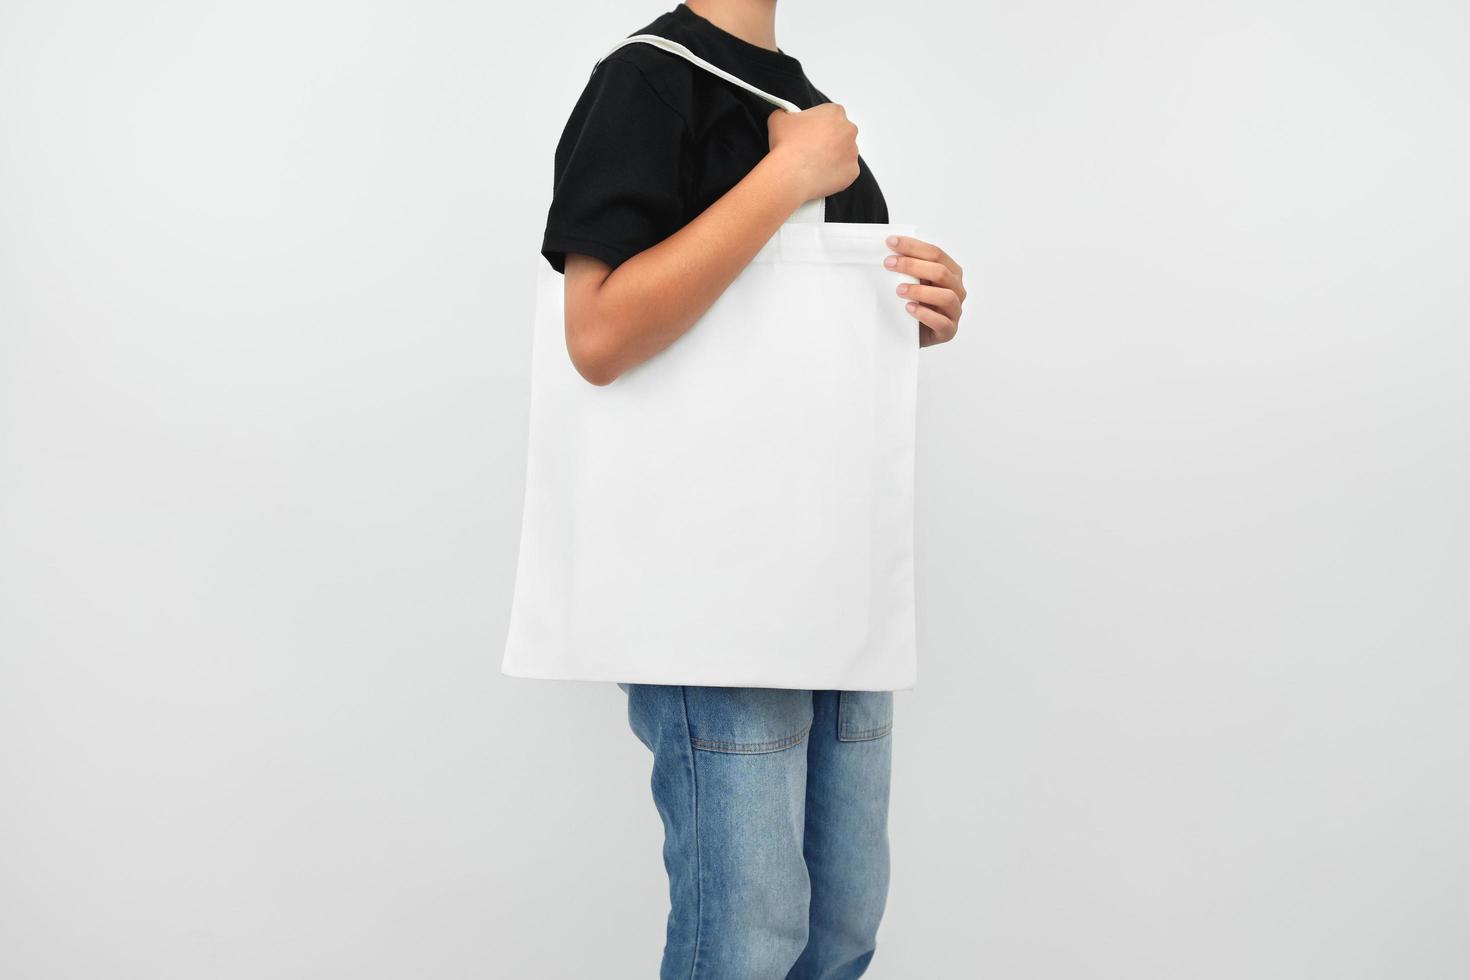 hipper vrouw Holding eco kleding stof zak isoleren Aan wit achtergrond foto